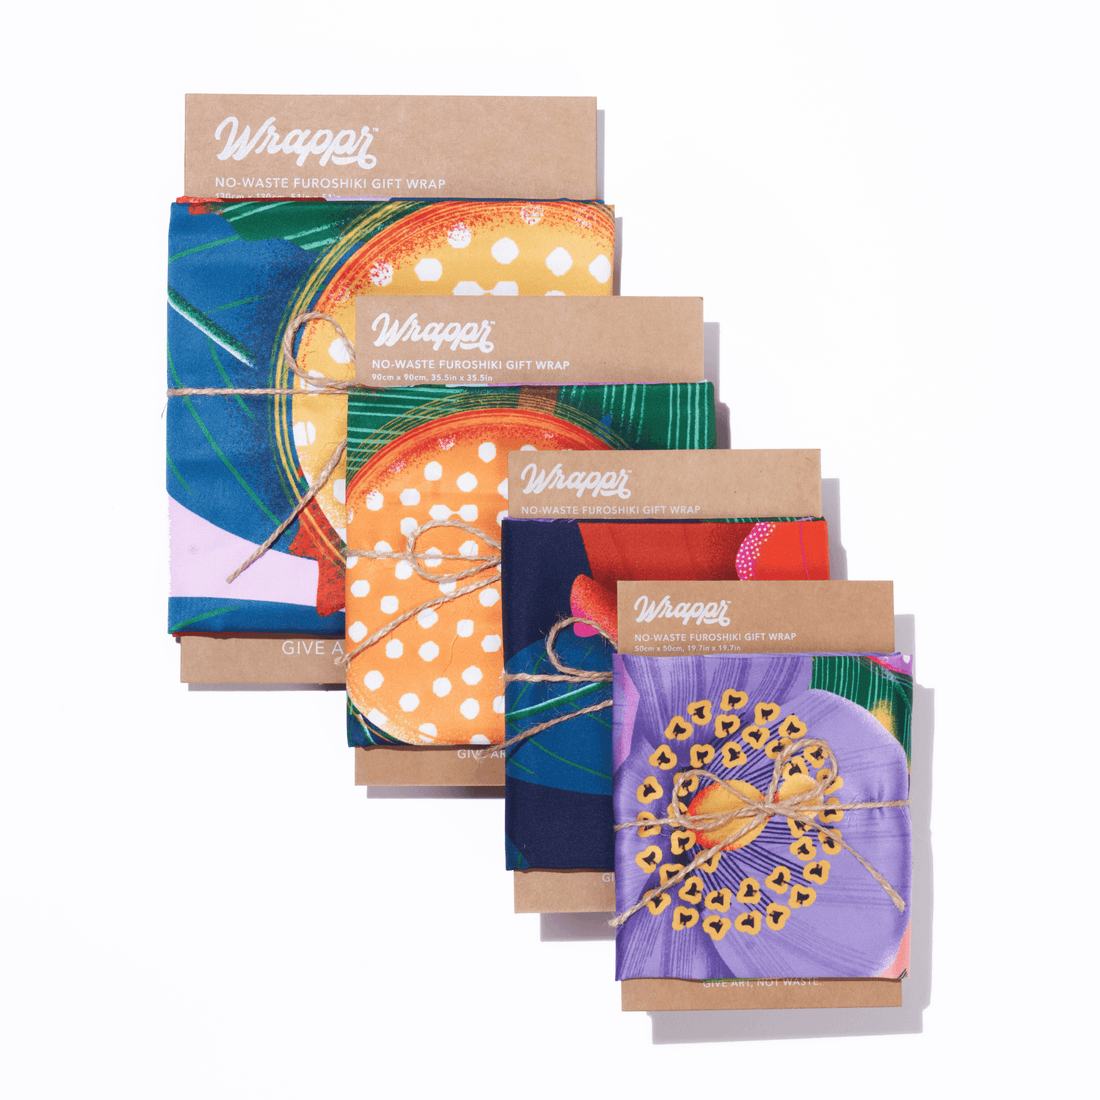 Light Where You Are Bundle | 4 Furoshiki Gift Wraps by Corina Plamada, 18", 28", 35" & 50" - Wrappr